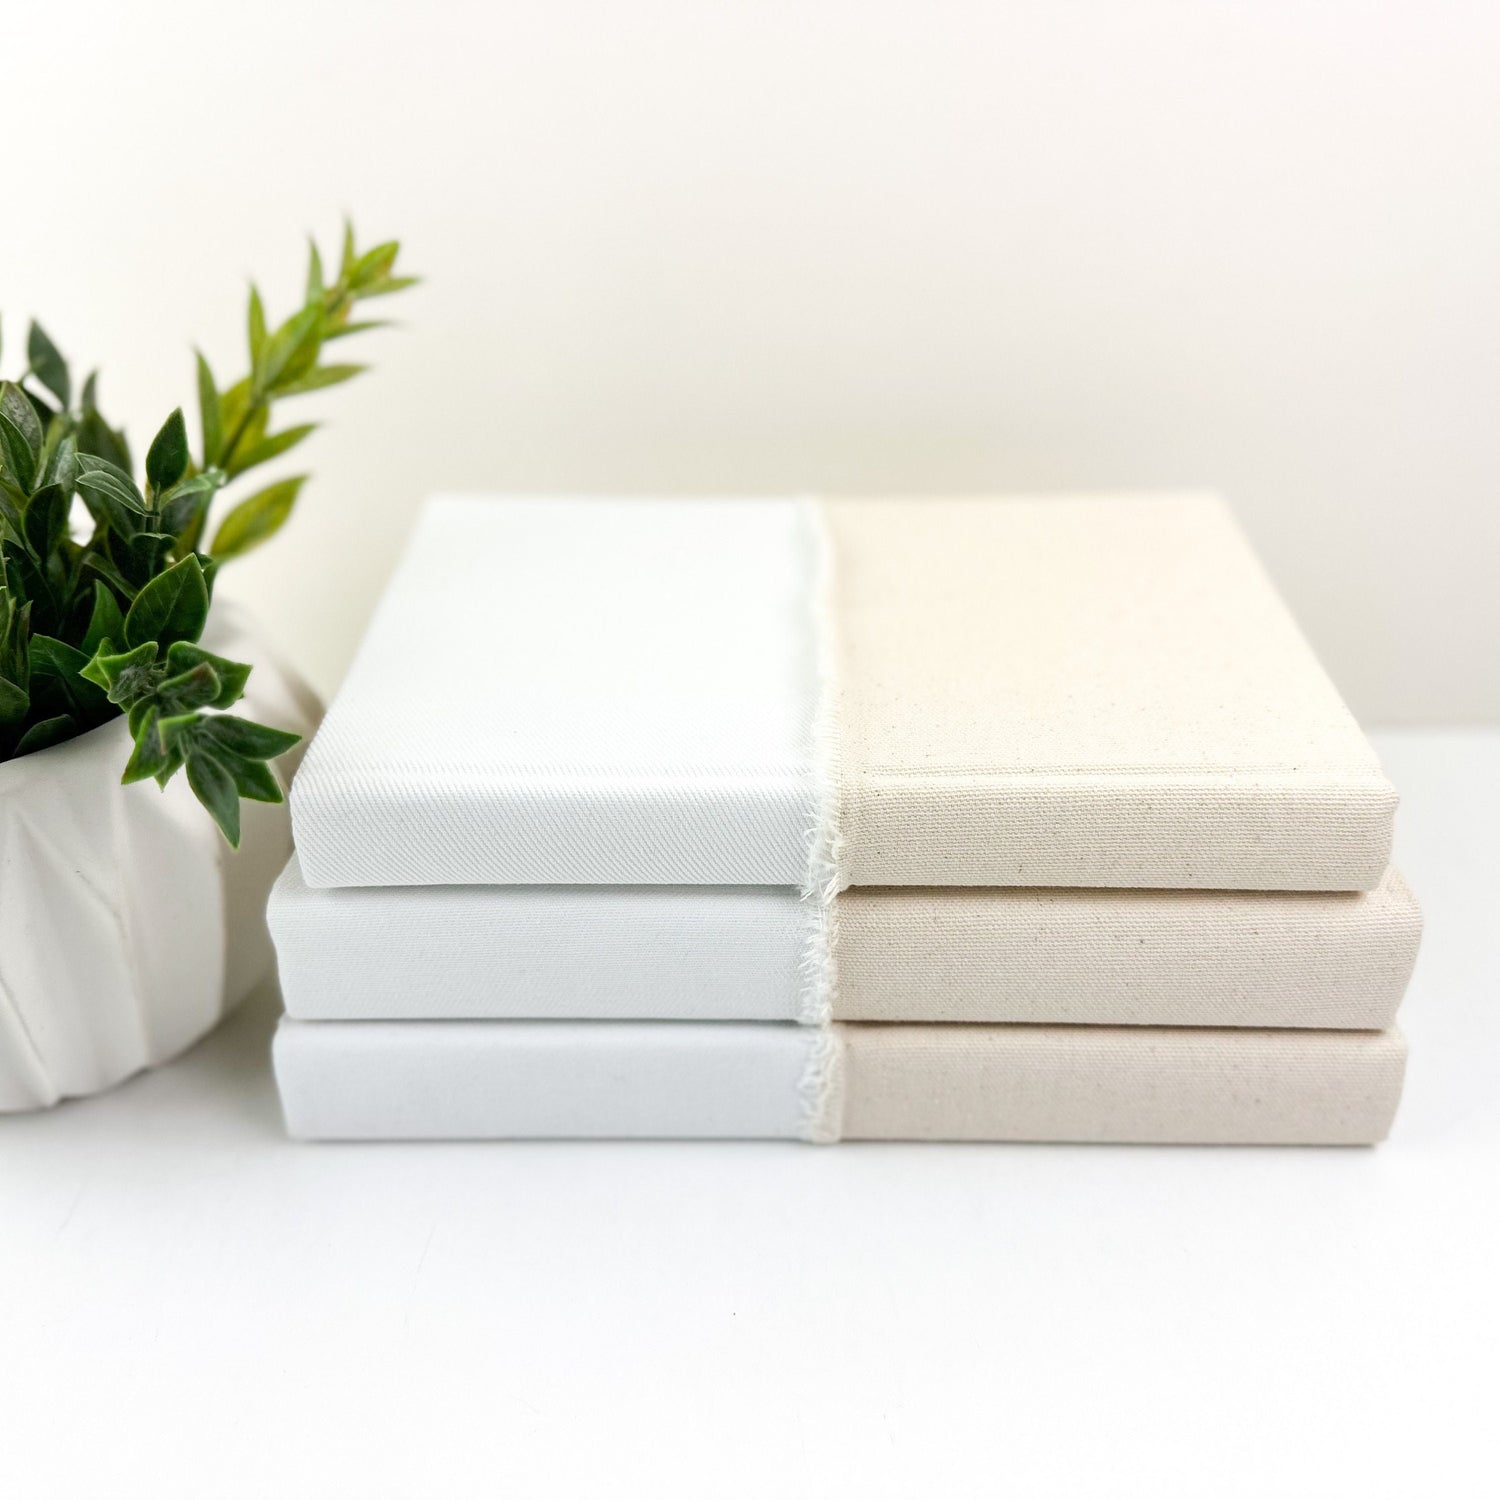 White Decorative Books for Living Room Decor, Book Set for Shelf Decor, Book Bundle, Table Decor